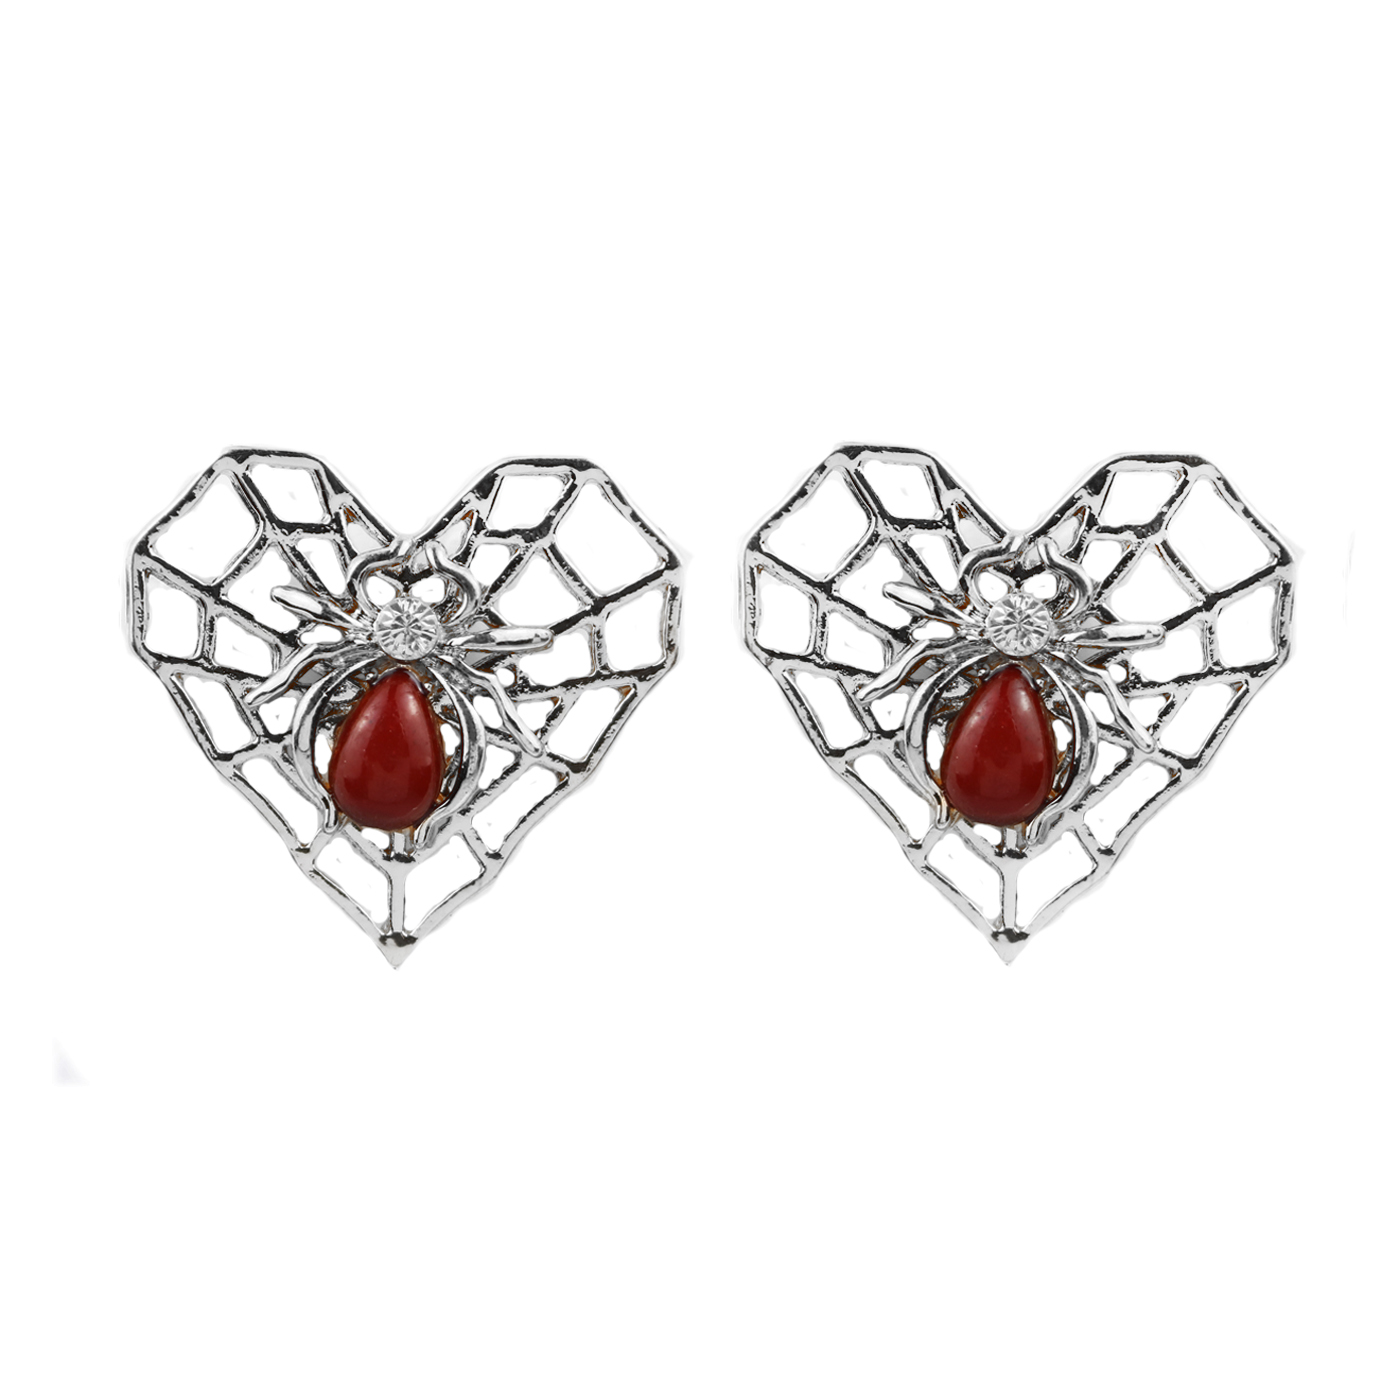 Pair Fashion Women Spider Web Heart Shirt Collar Brooch Pin Jewelry -Silver